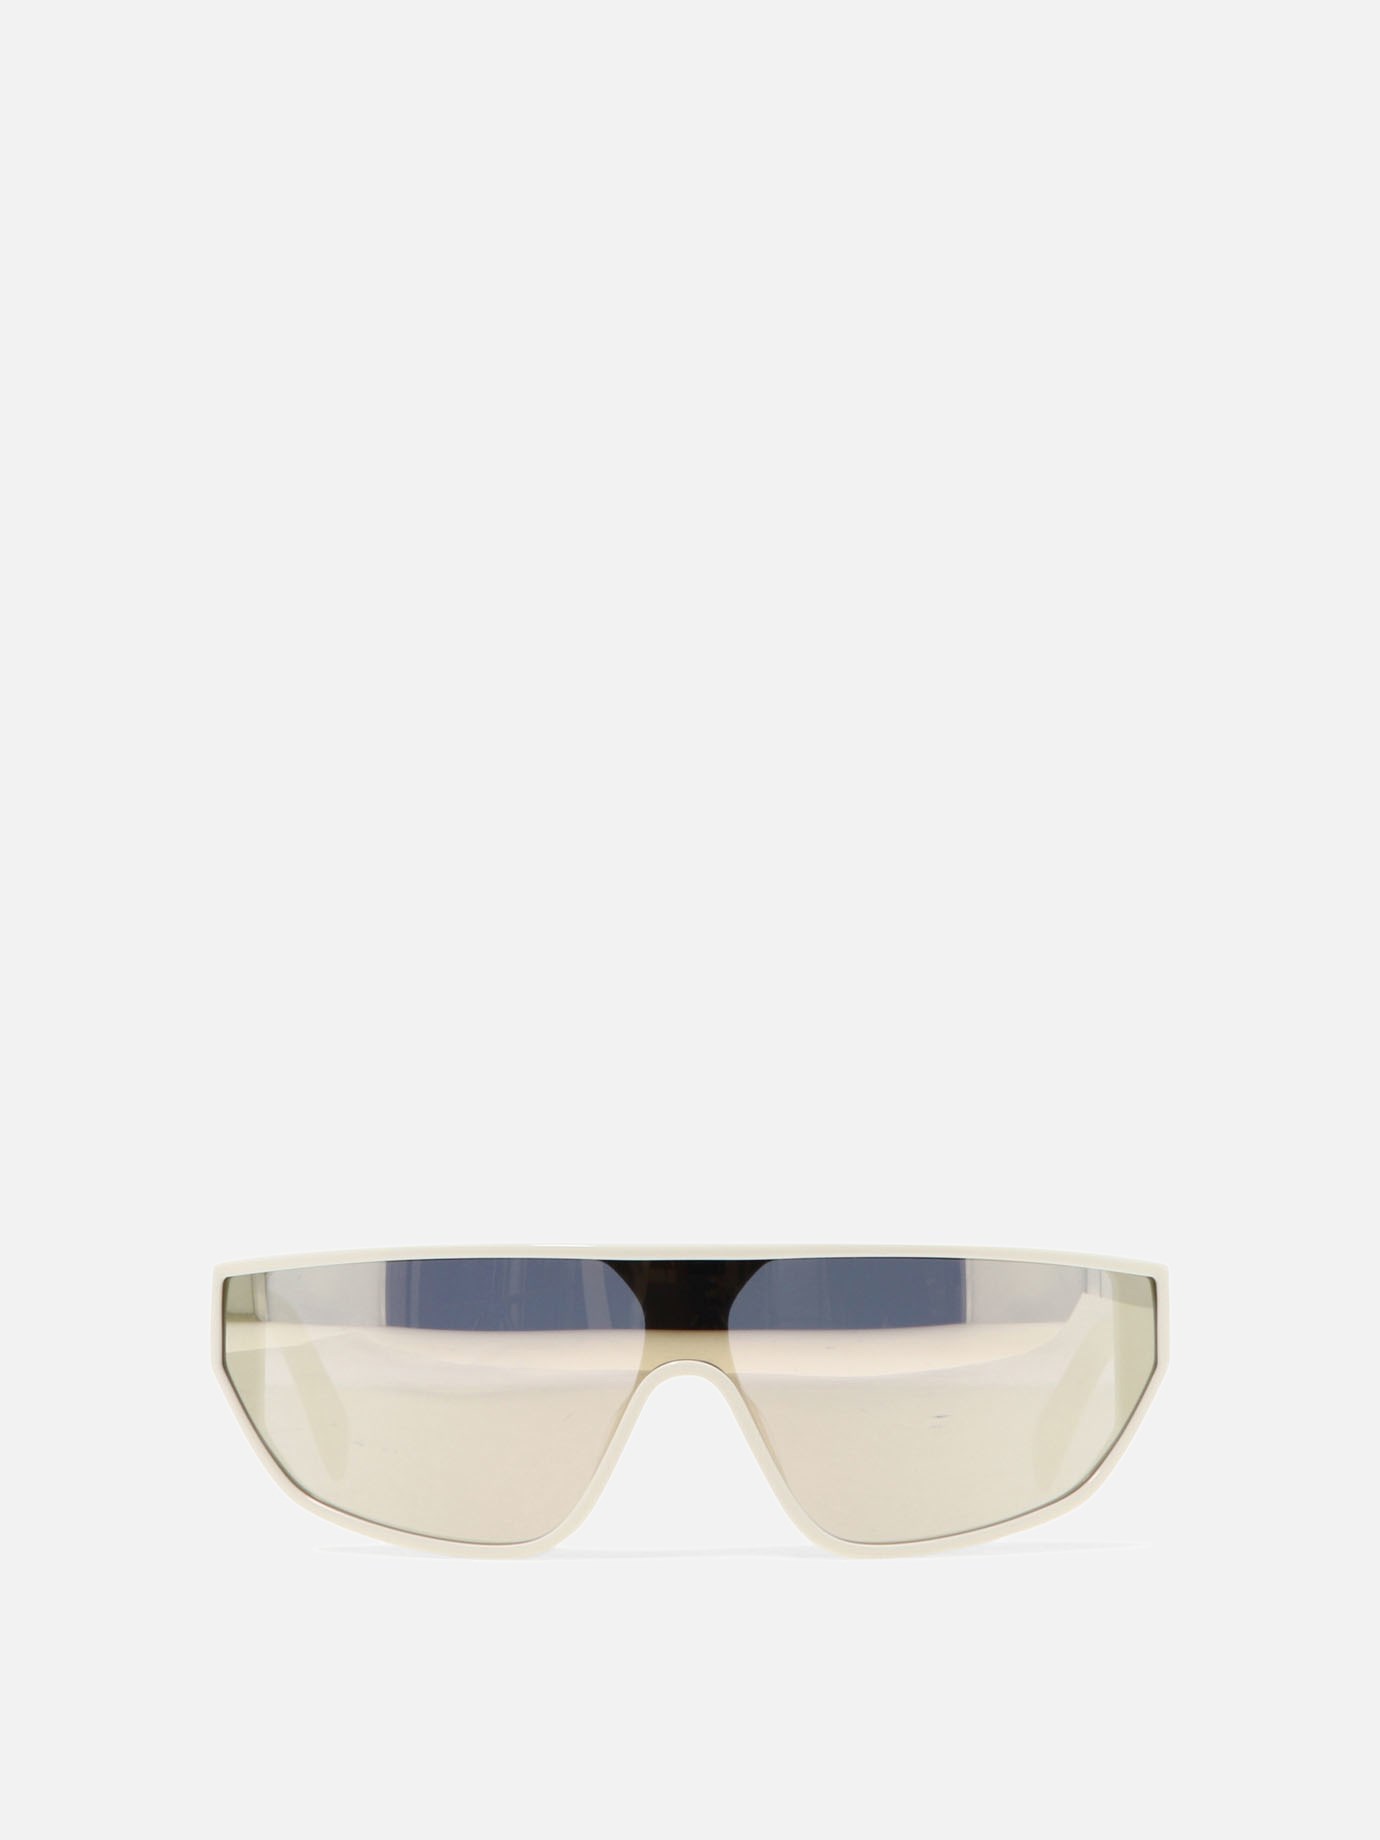  Black Frame 32  sunglasses by Celine